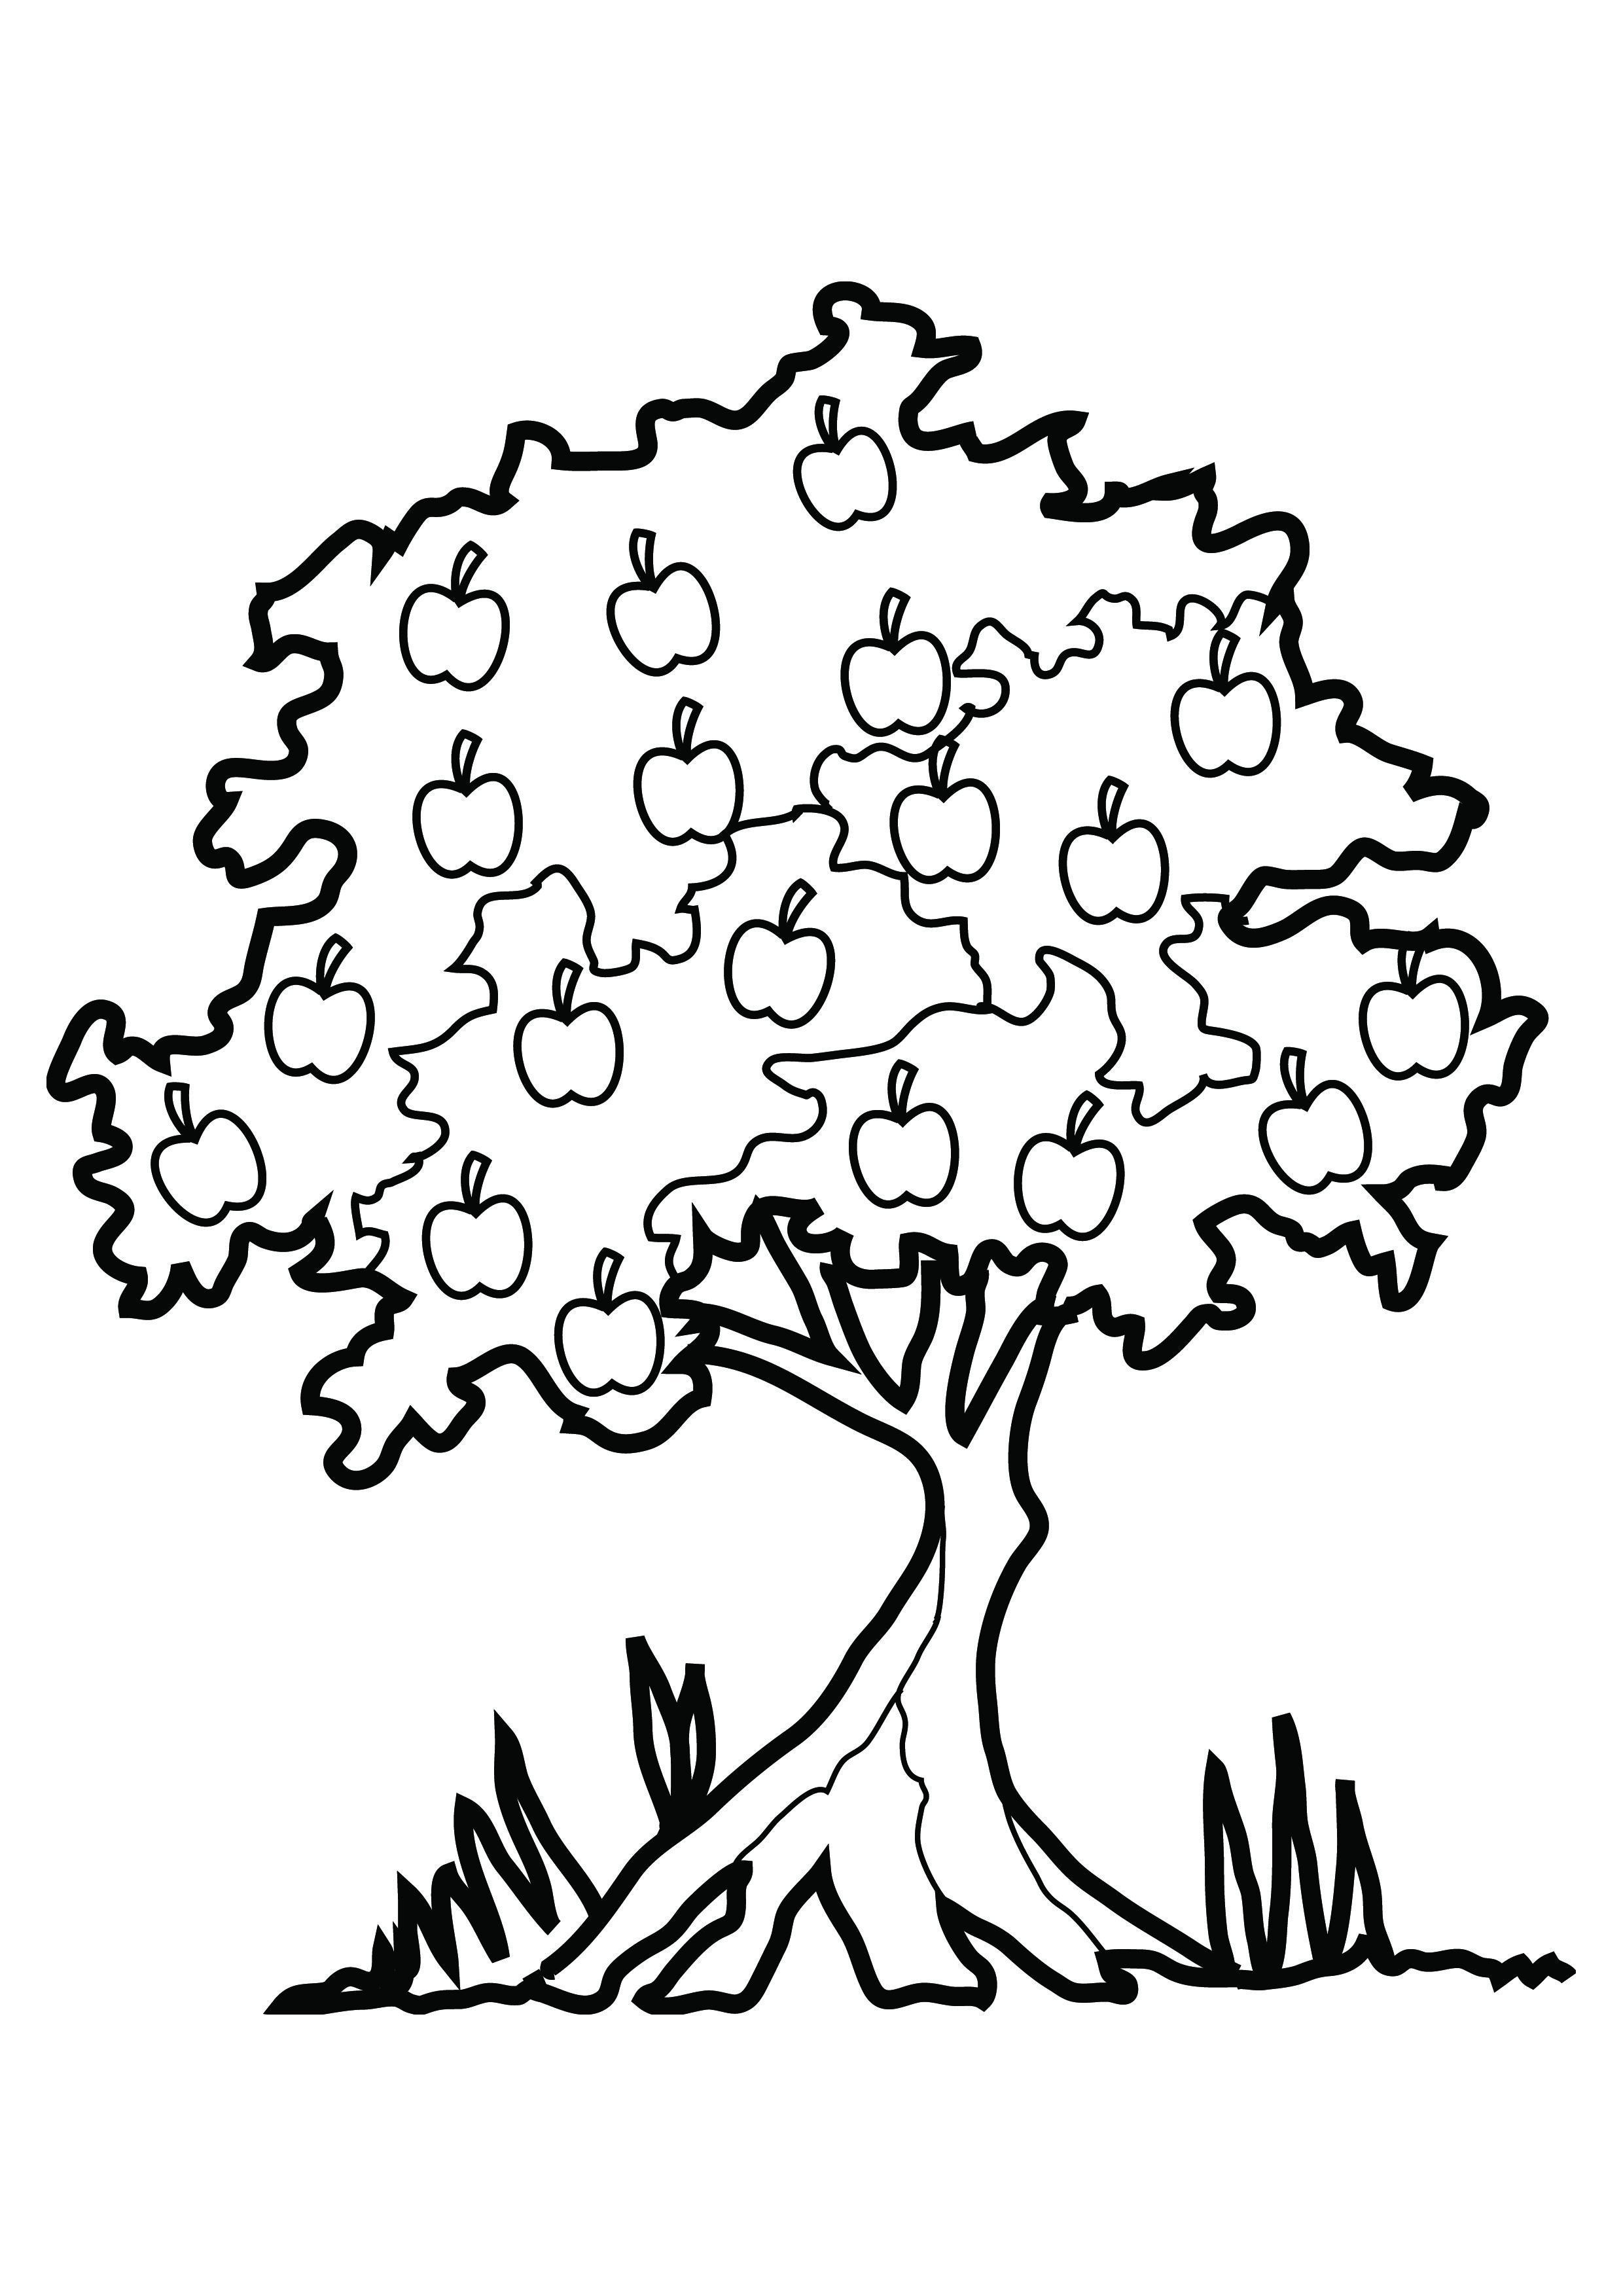 Animal Printable Tree Coloring Page for Adult